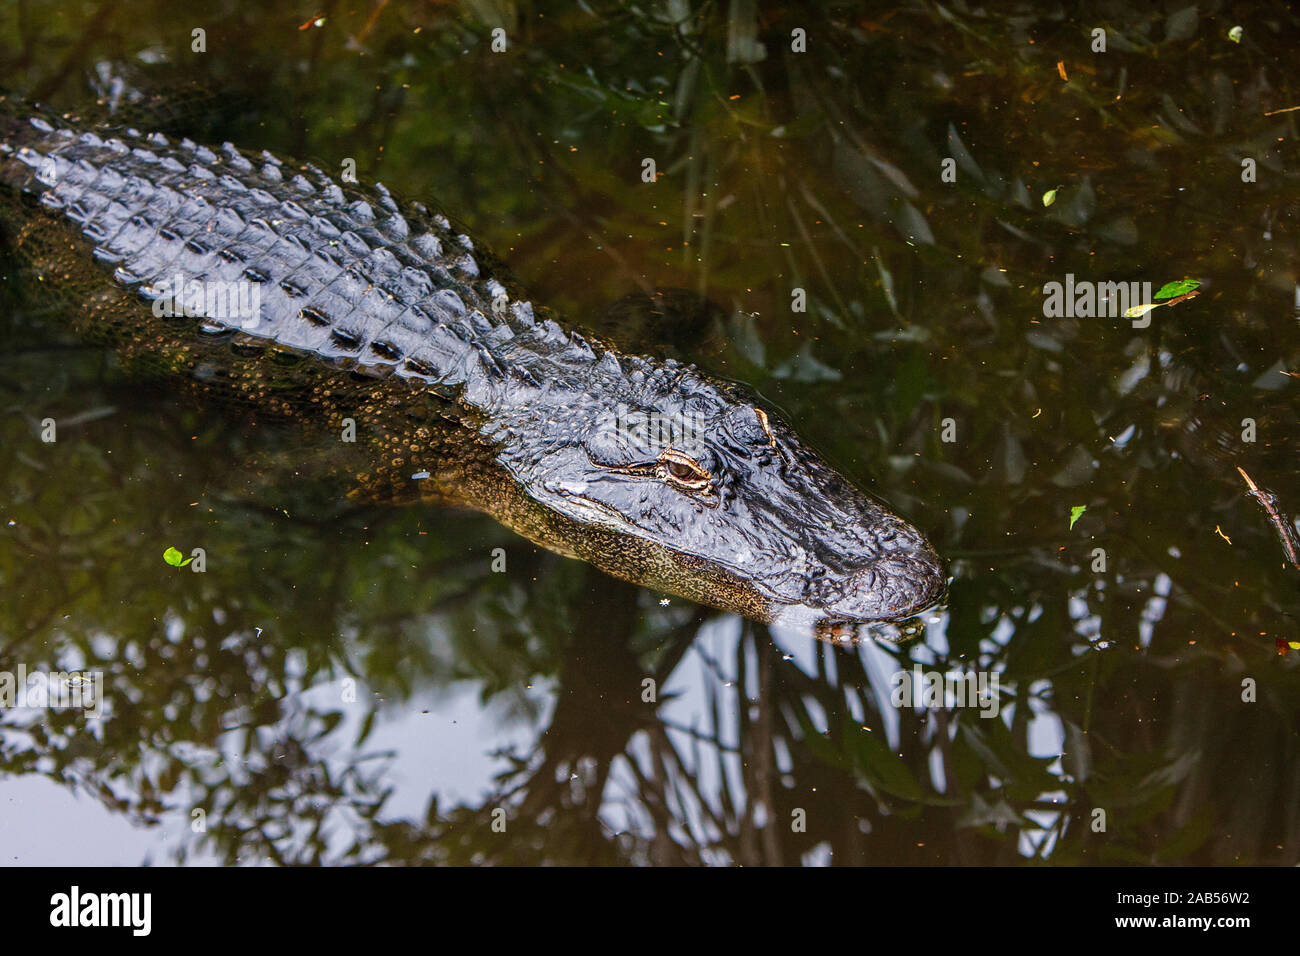 Mississippi-Alligator (Alligator mississippiensis) Foto de stock